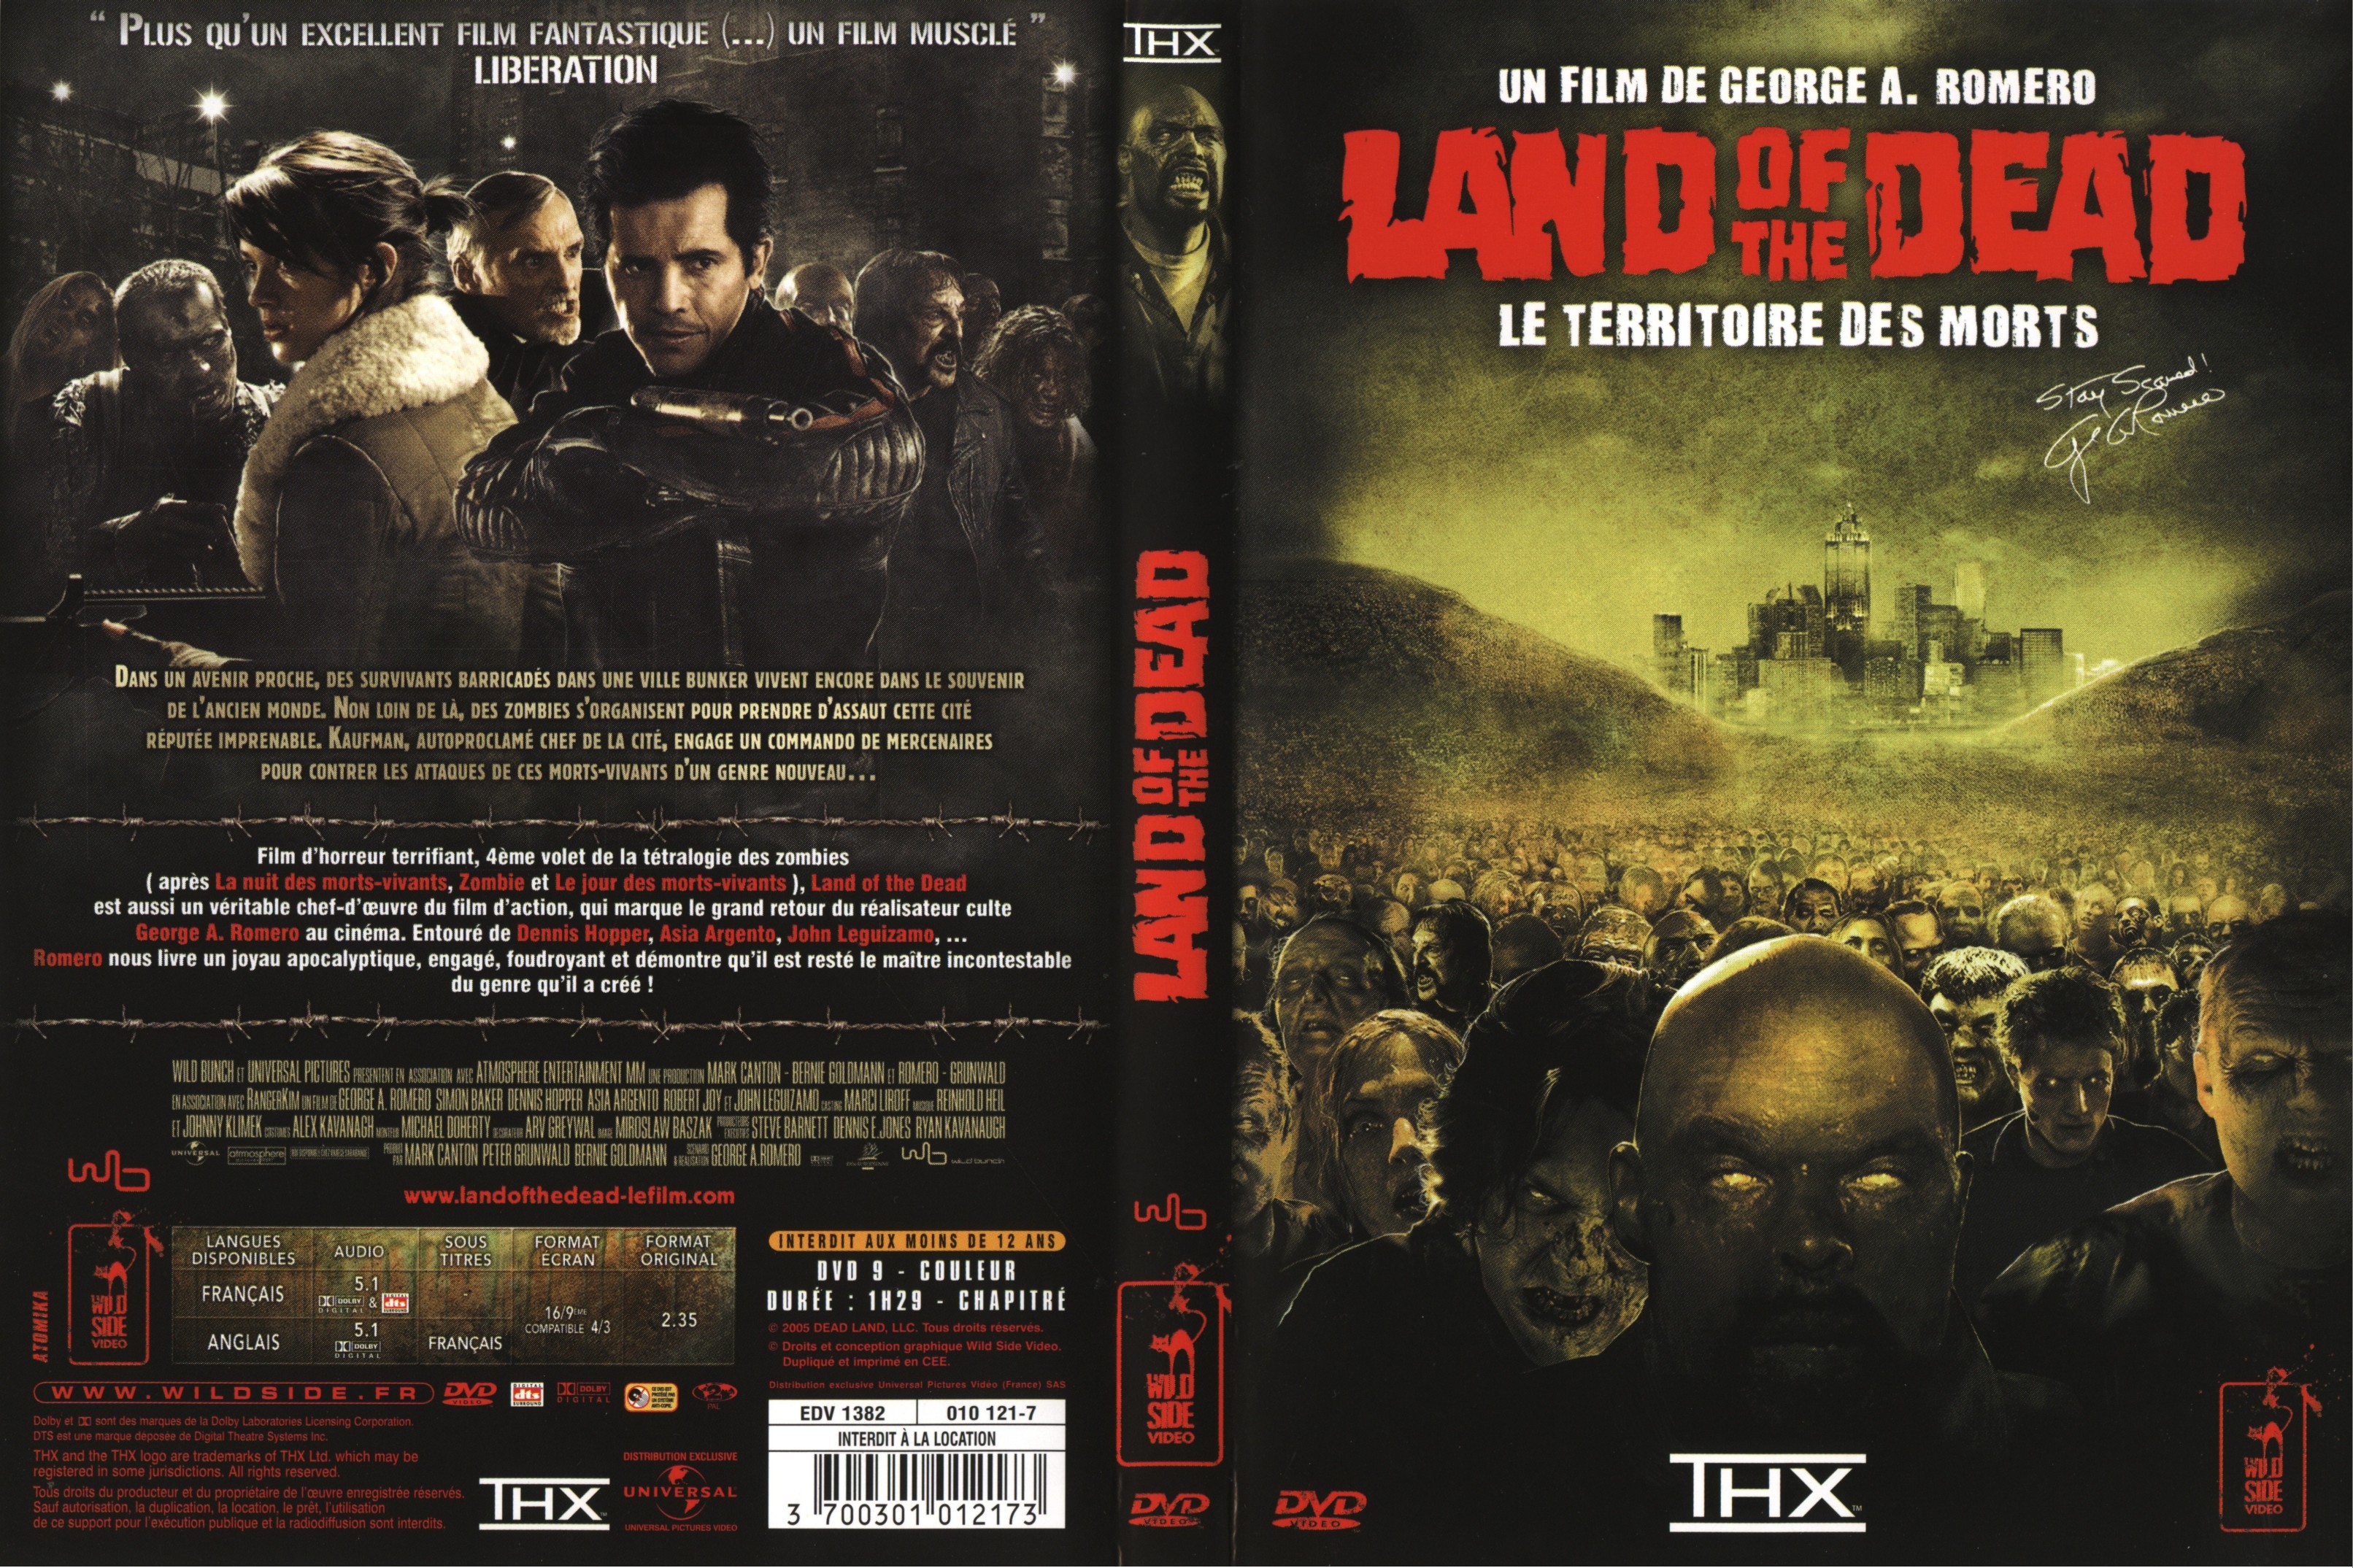 Jaquette DVD Land of the dead v2